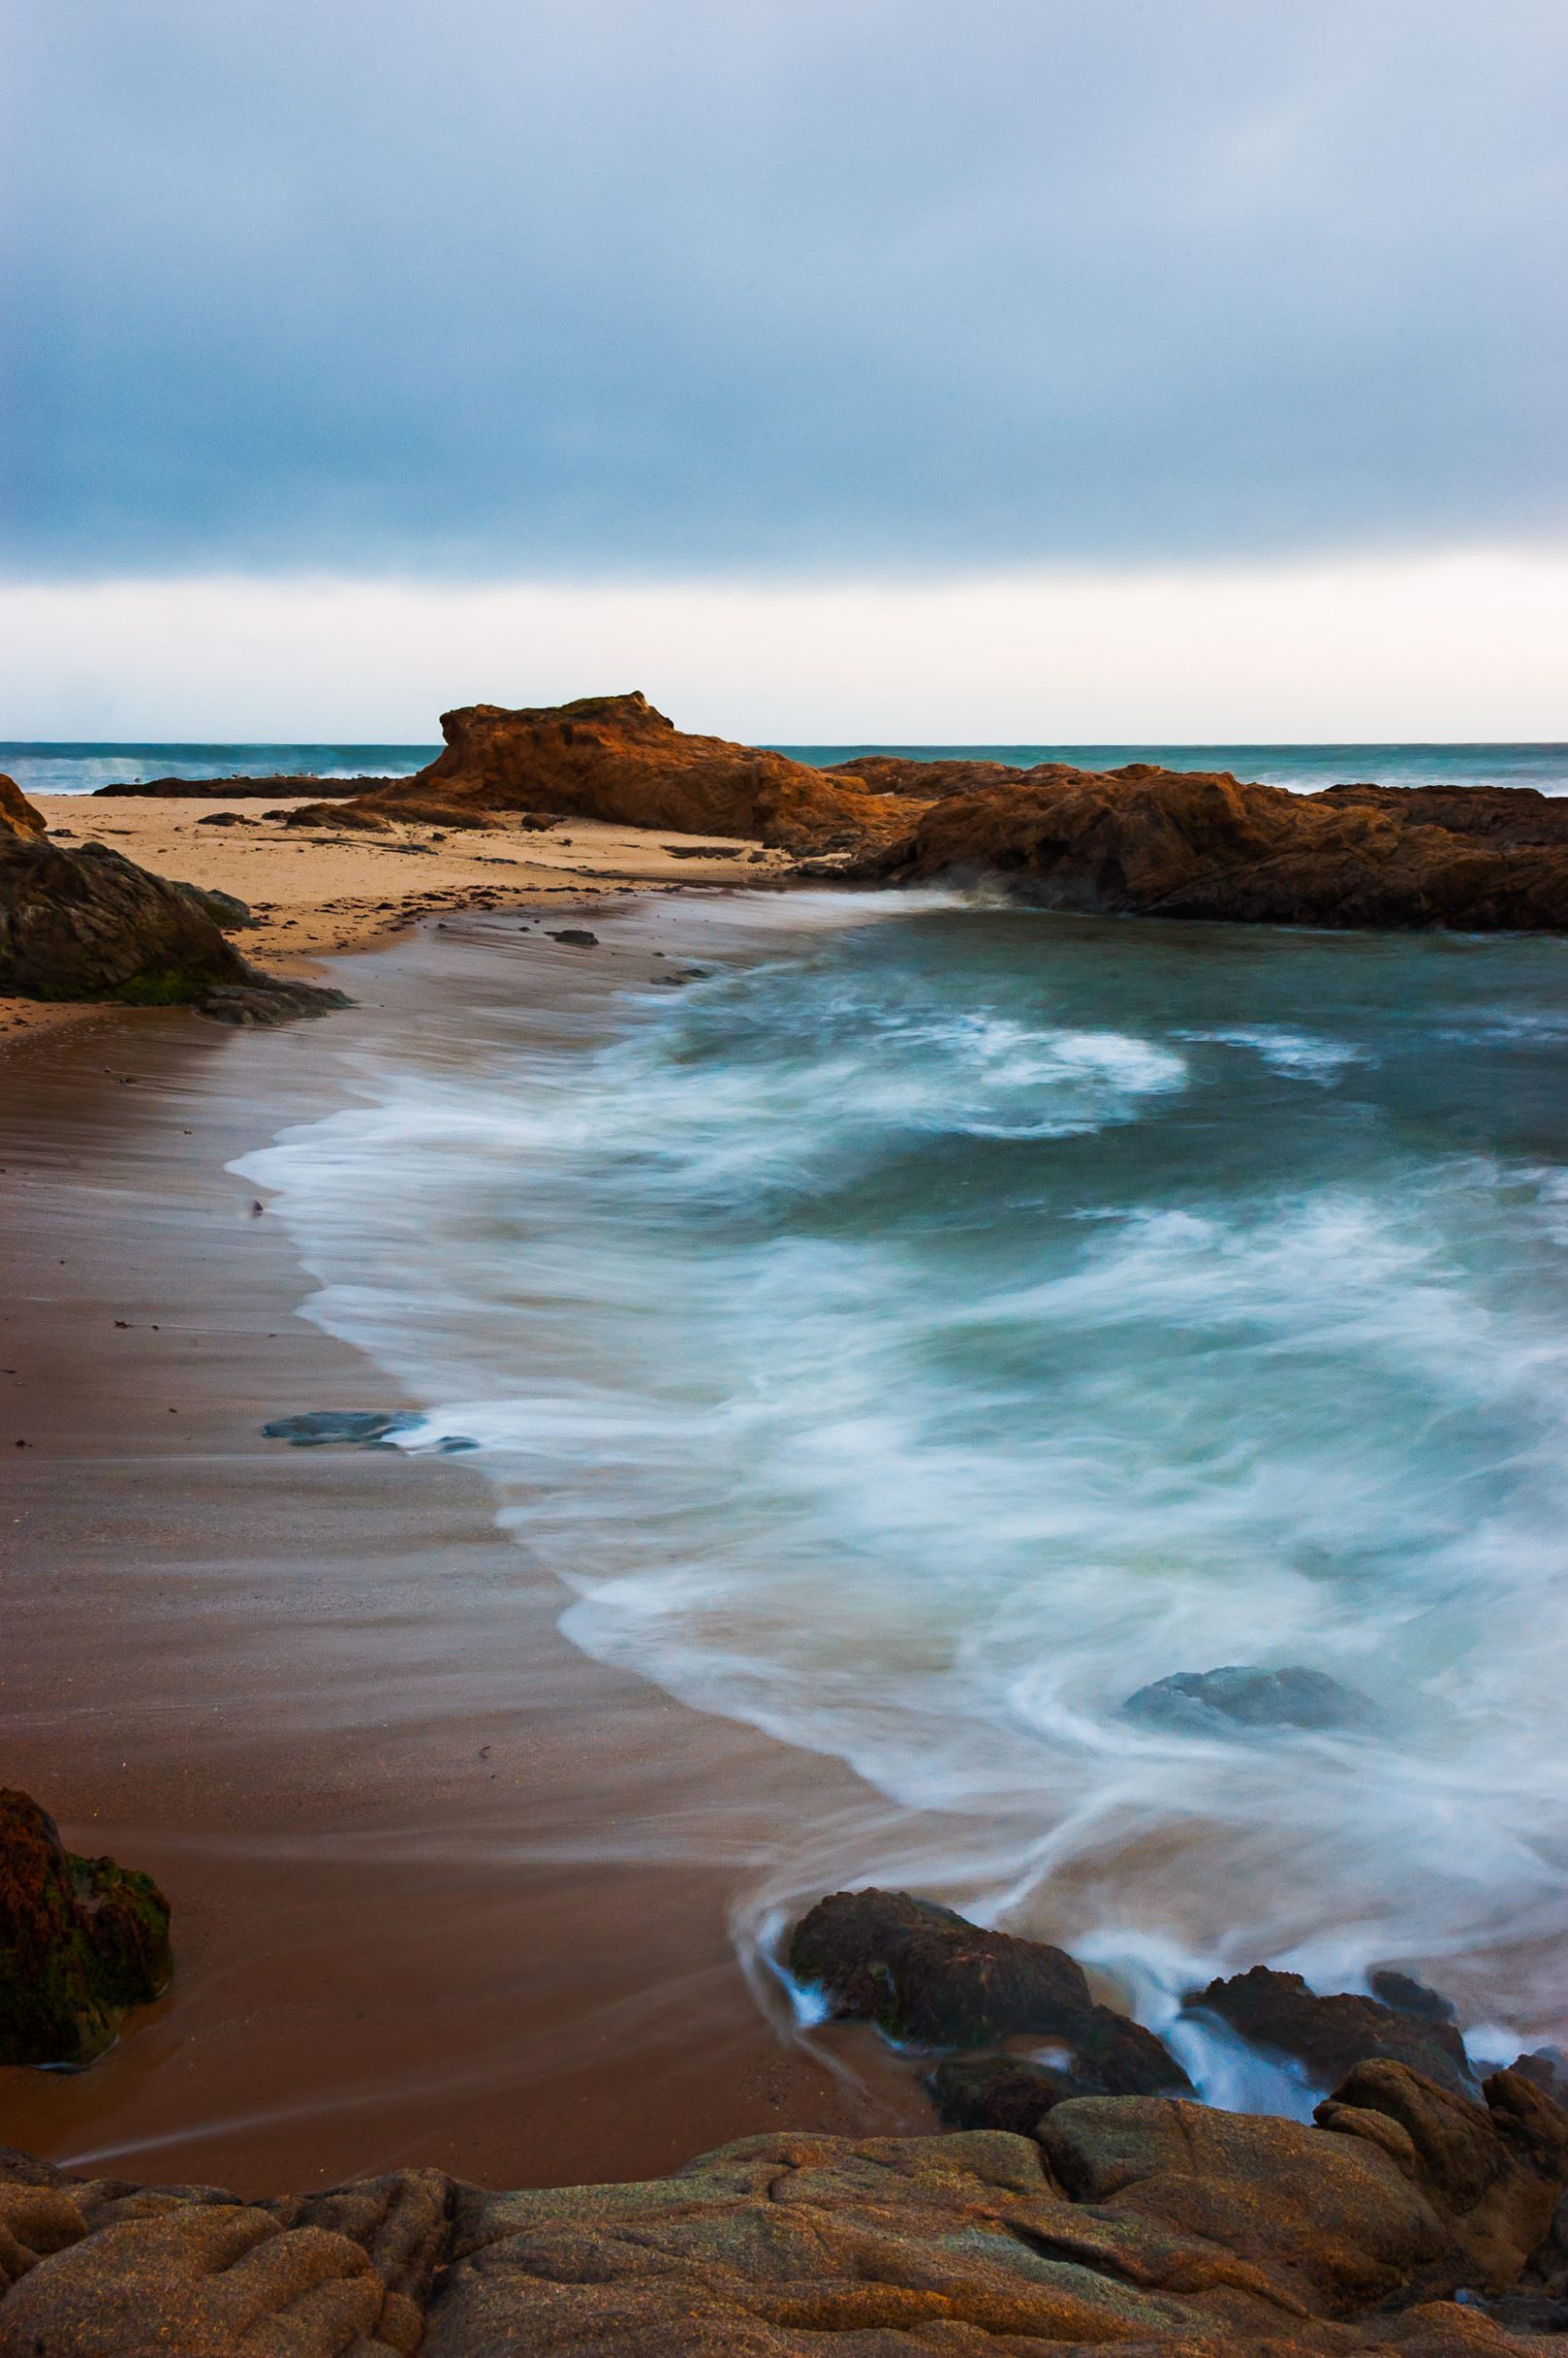 Blurred waves on California beach